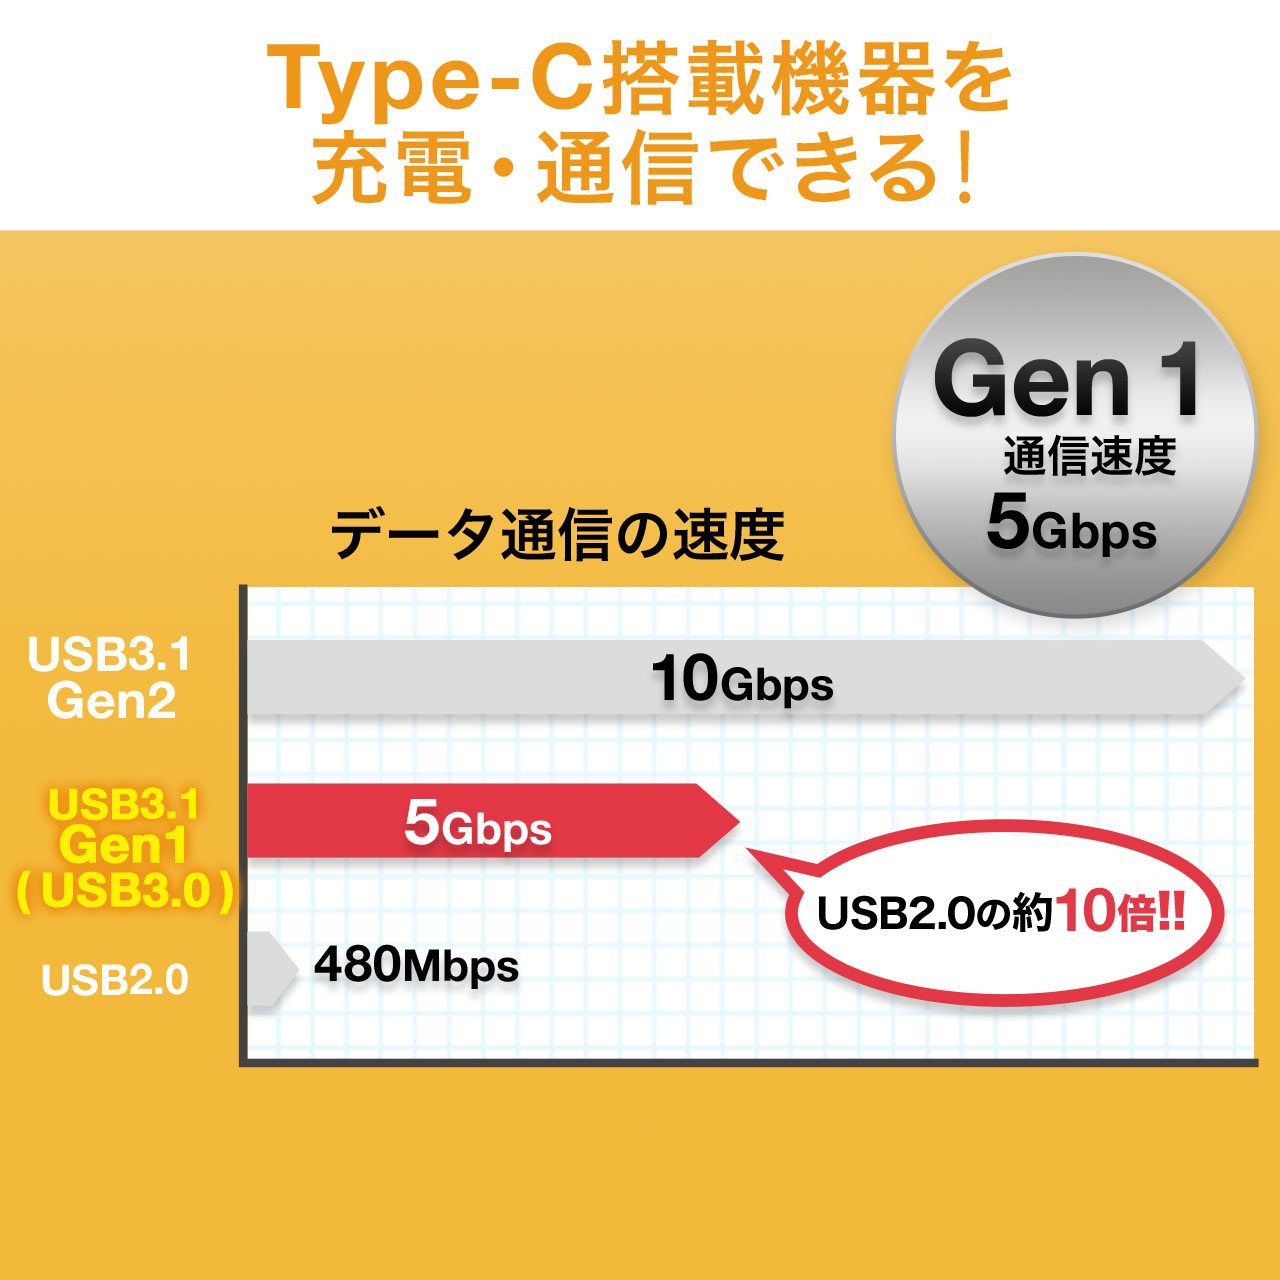 USB ^CvC/USB AϊP[uiUSB3.1EGen1EType-CIX/USB AEUSB-IFF؍ς݁E15cmEubNj 500-USB055-015